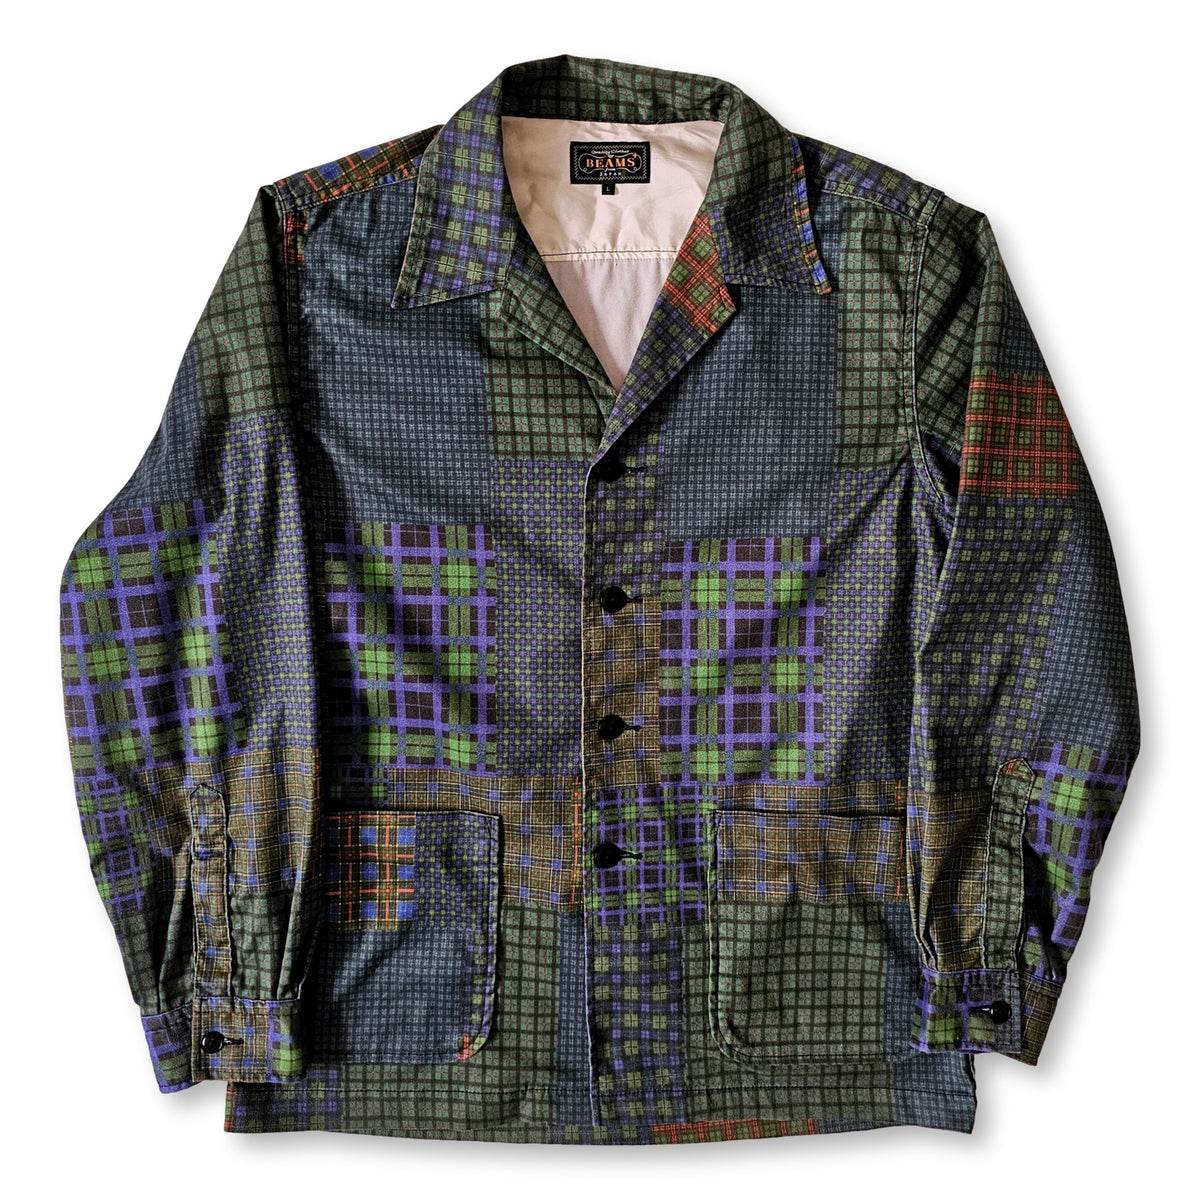 Beams Plus Komatsu patchwork jacket made in Japan | retroiscooler 